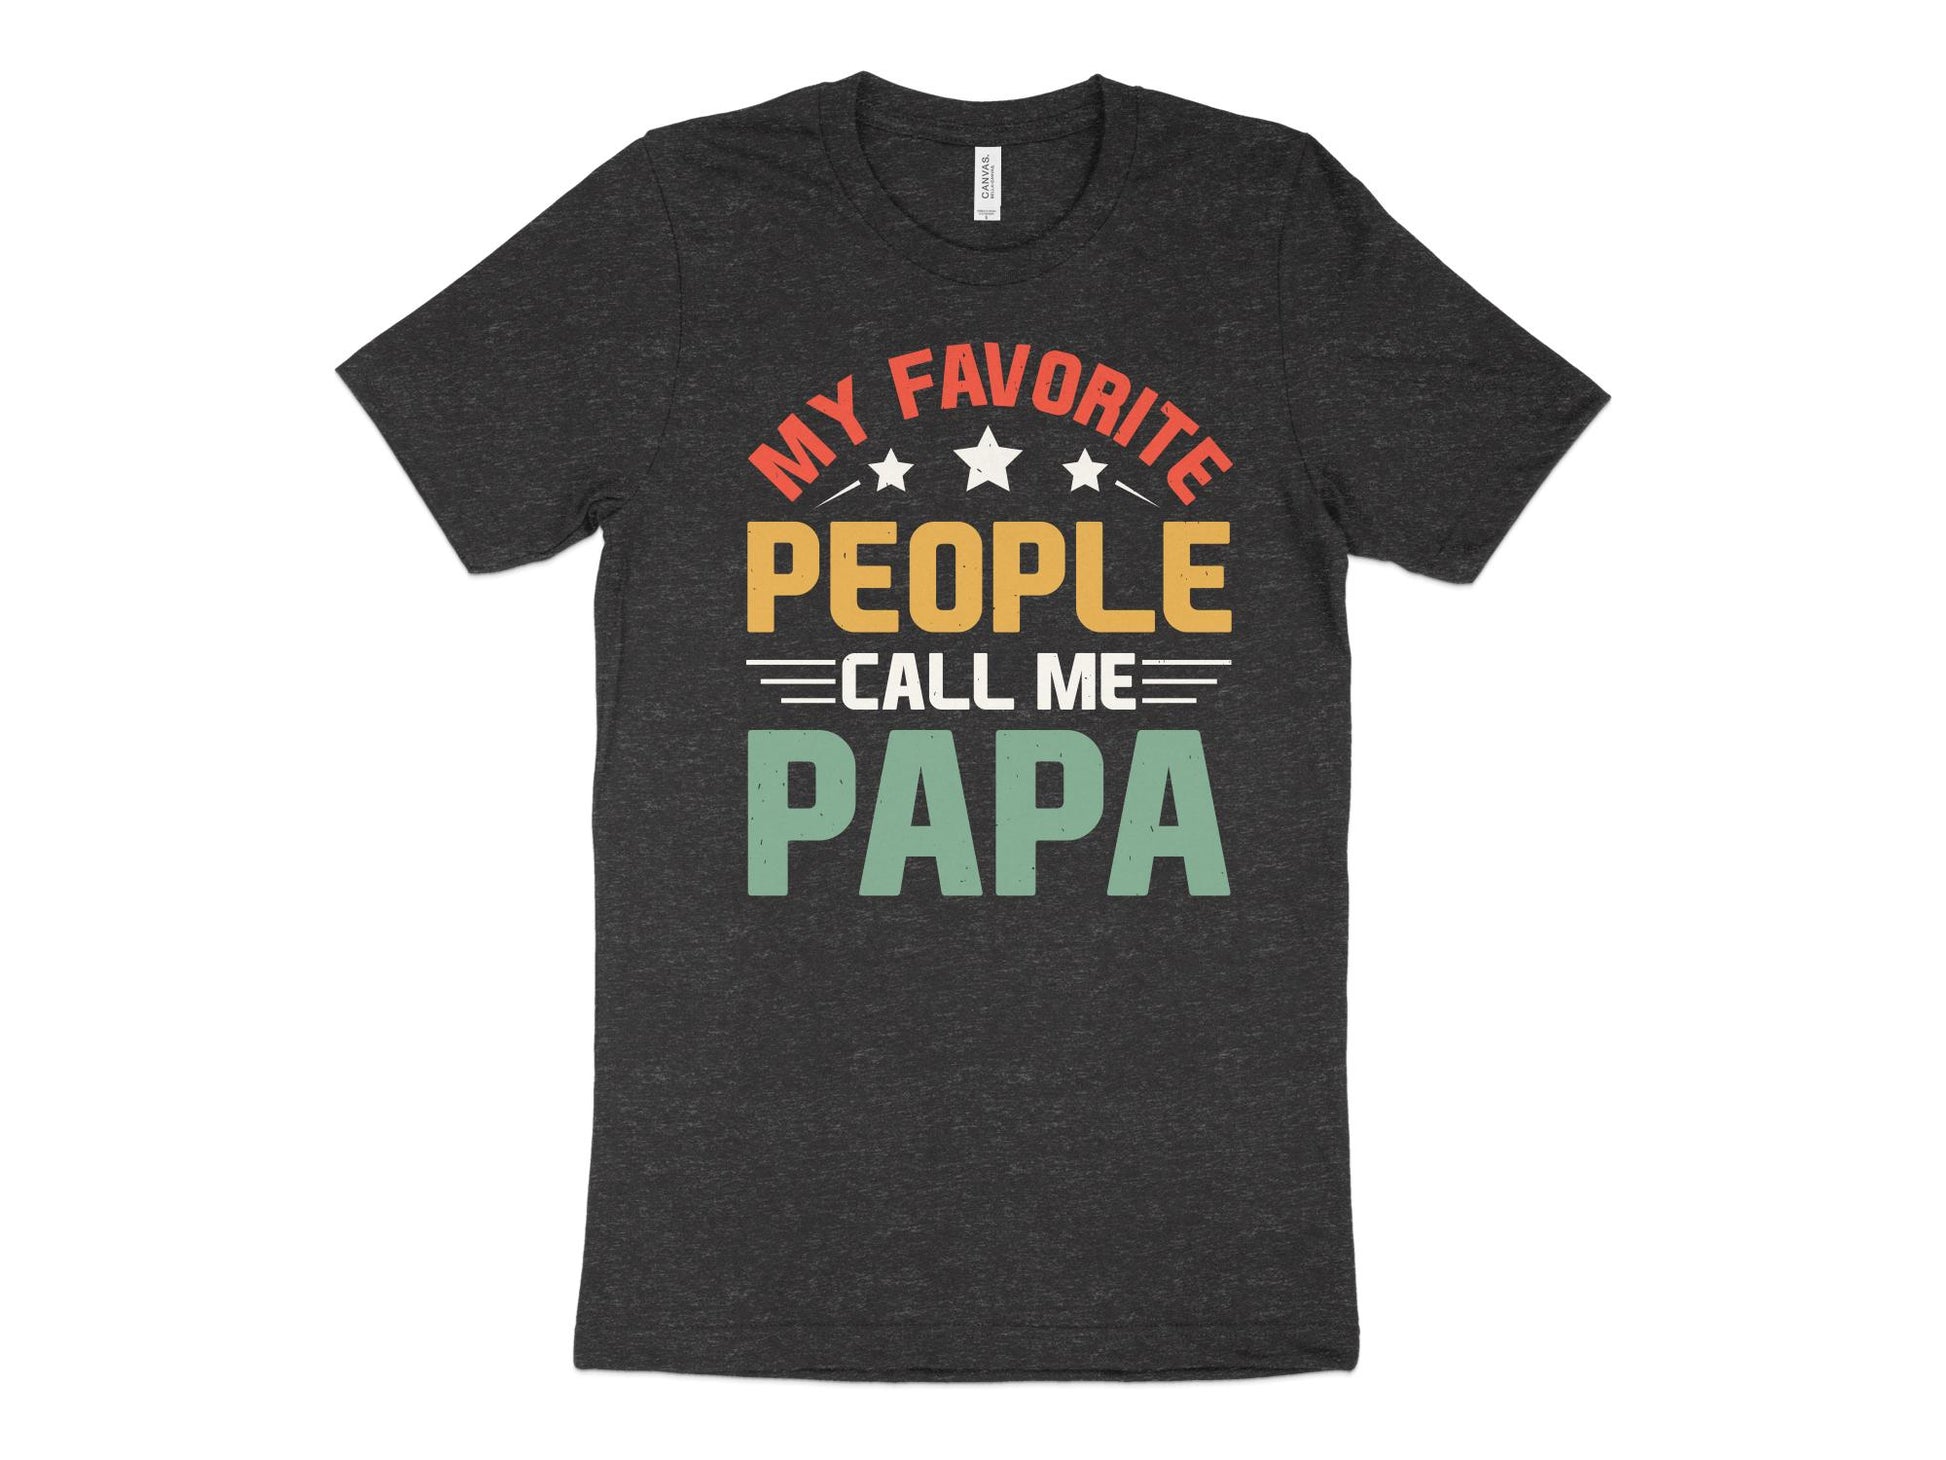 My Favorite People Call Me Papa Shirt, charcoal